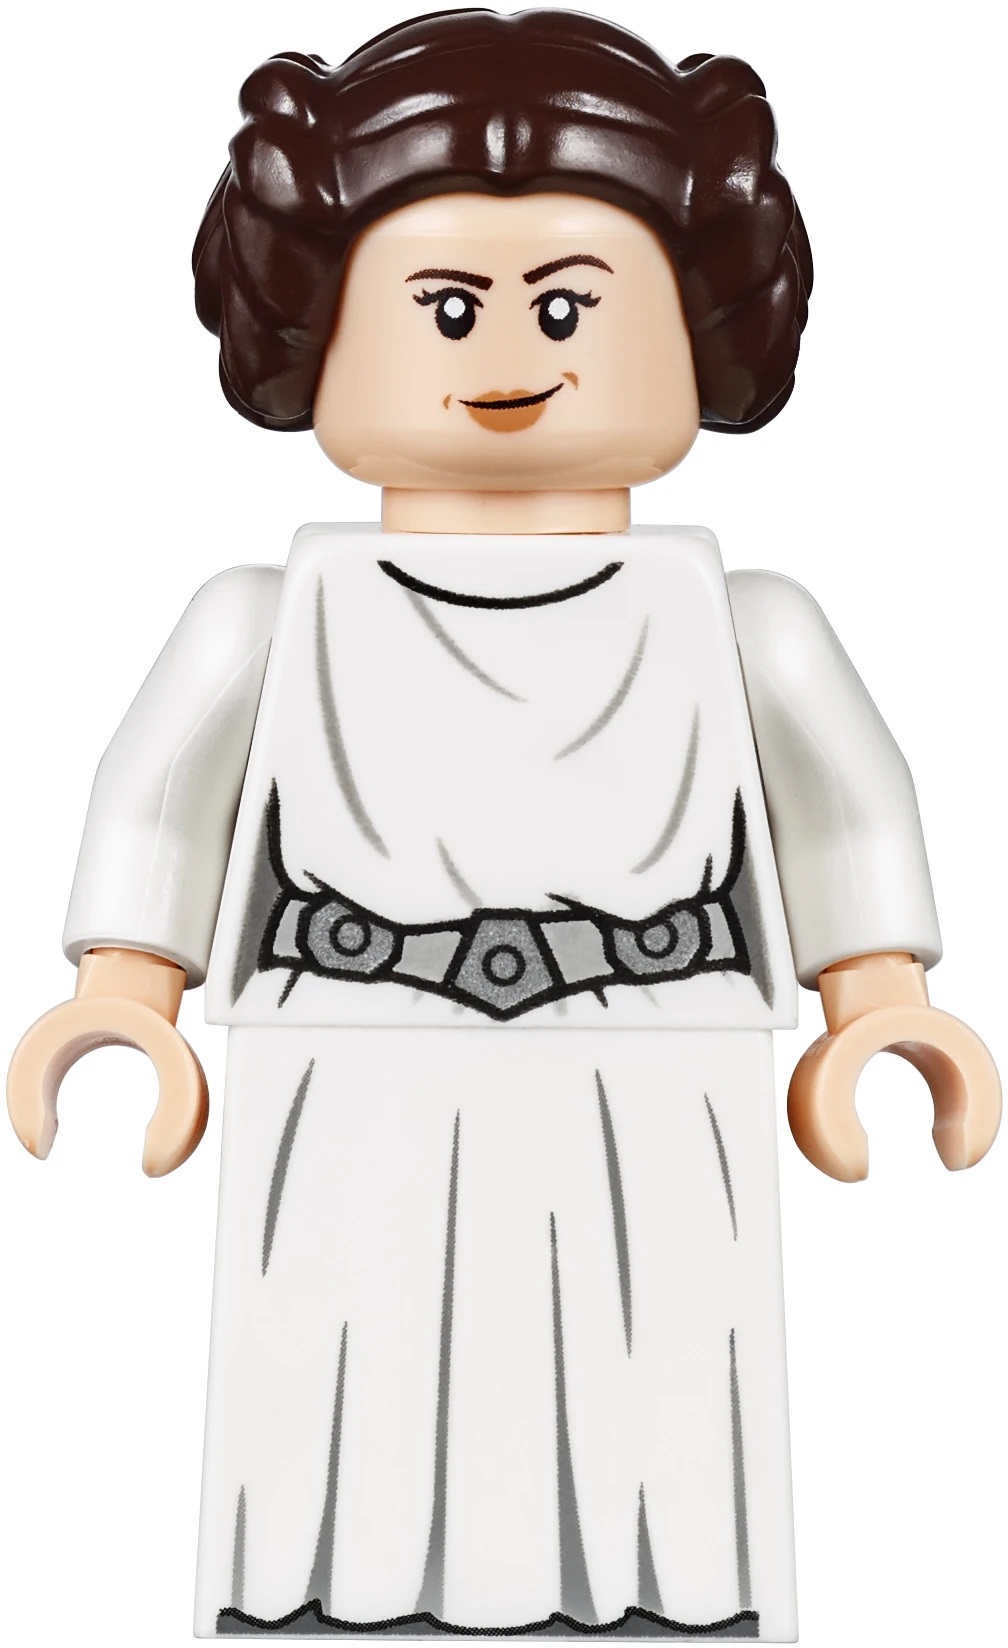 Lego Princess Leia 10236 Endor Loose Hair Star Wars Minifigure 